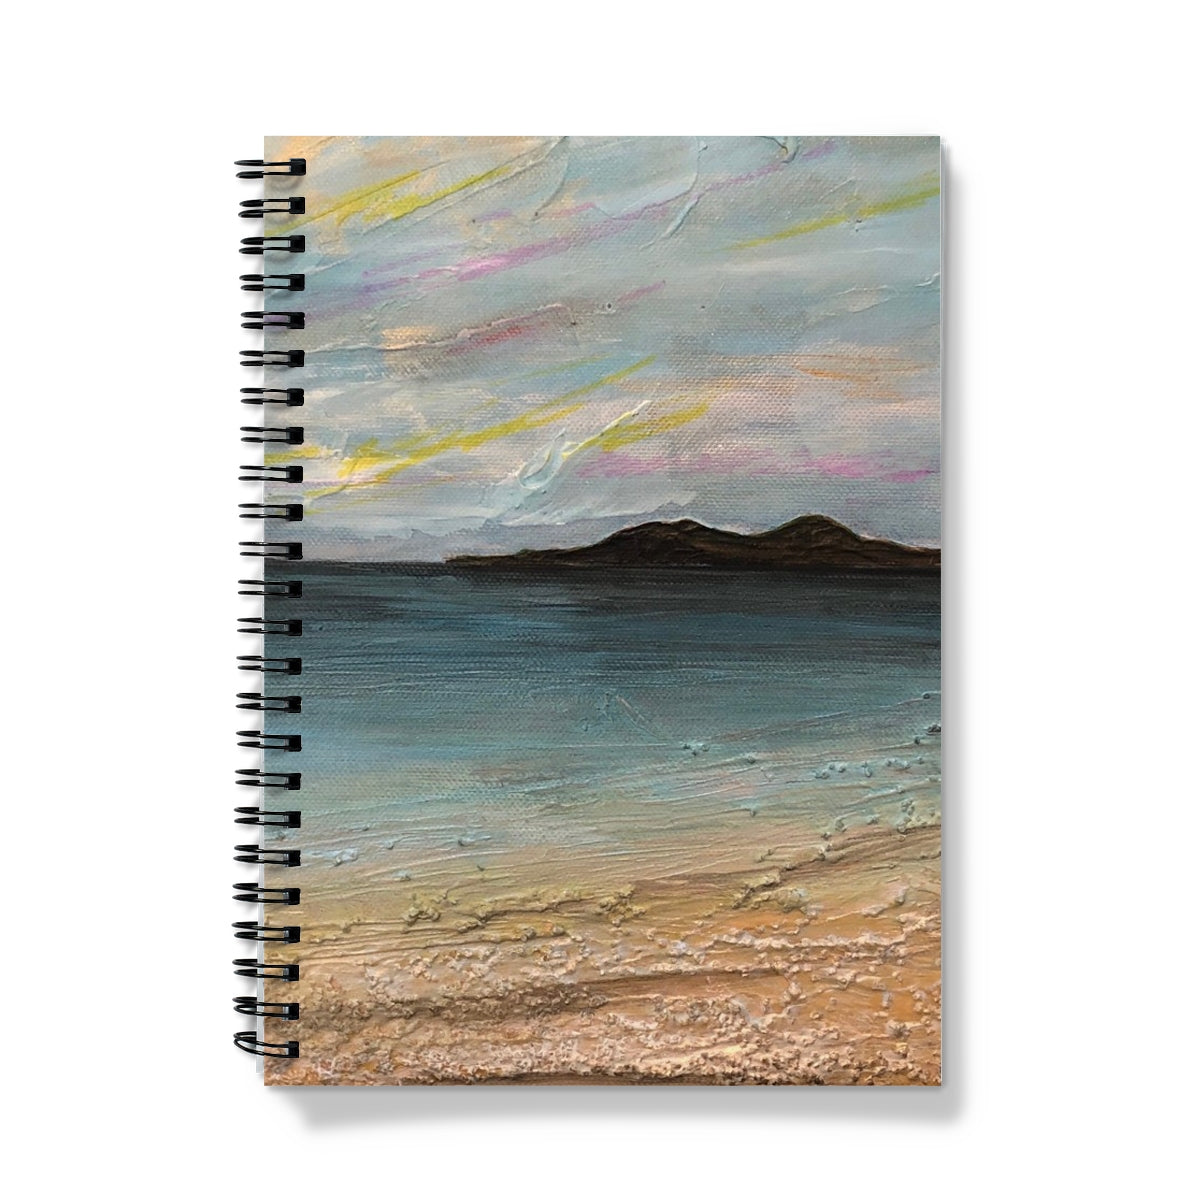 Garrynamonie Beach South Uist Art Gifts Notebook-Journals & Notebooks-Hebridean Islands Art Gallery-A4-Lined-Paintings, Prints, Homeware, Art Gifts From Scotland By Scottish Artist Kevin Hunter